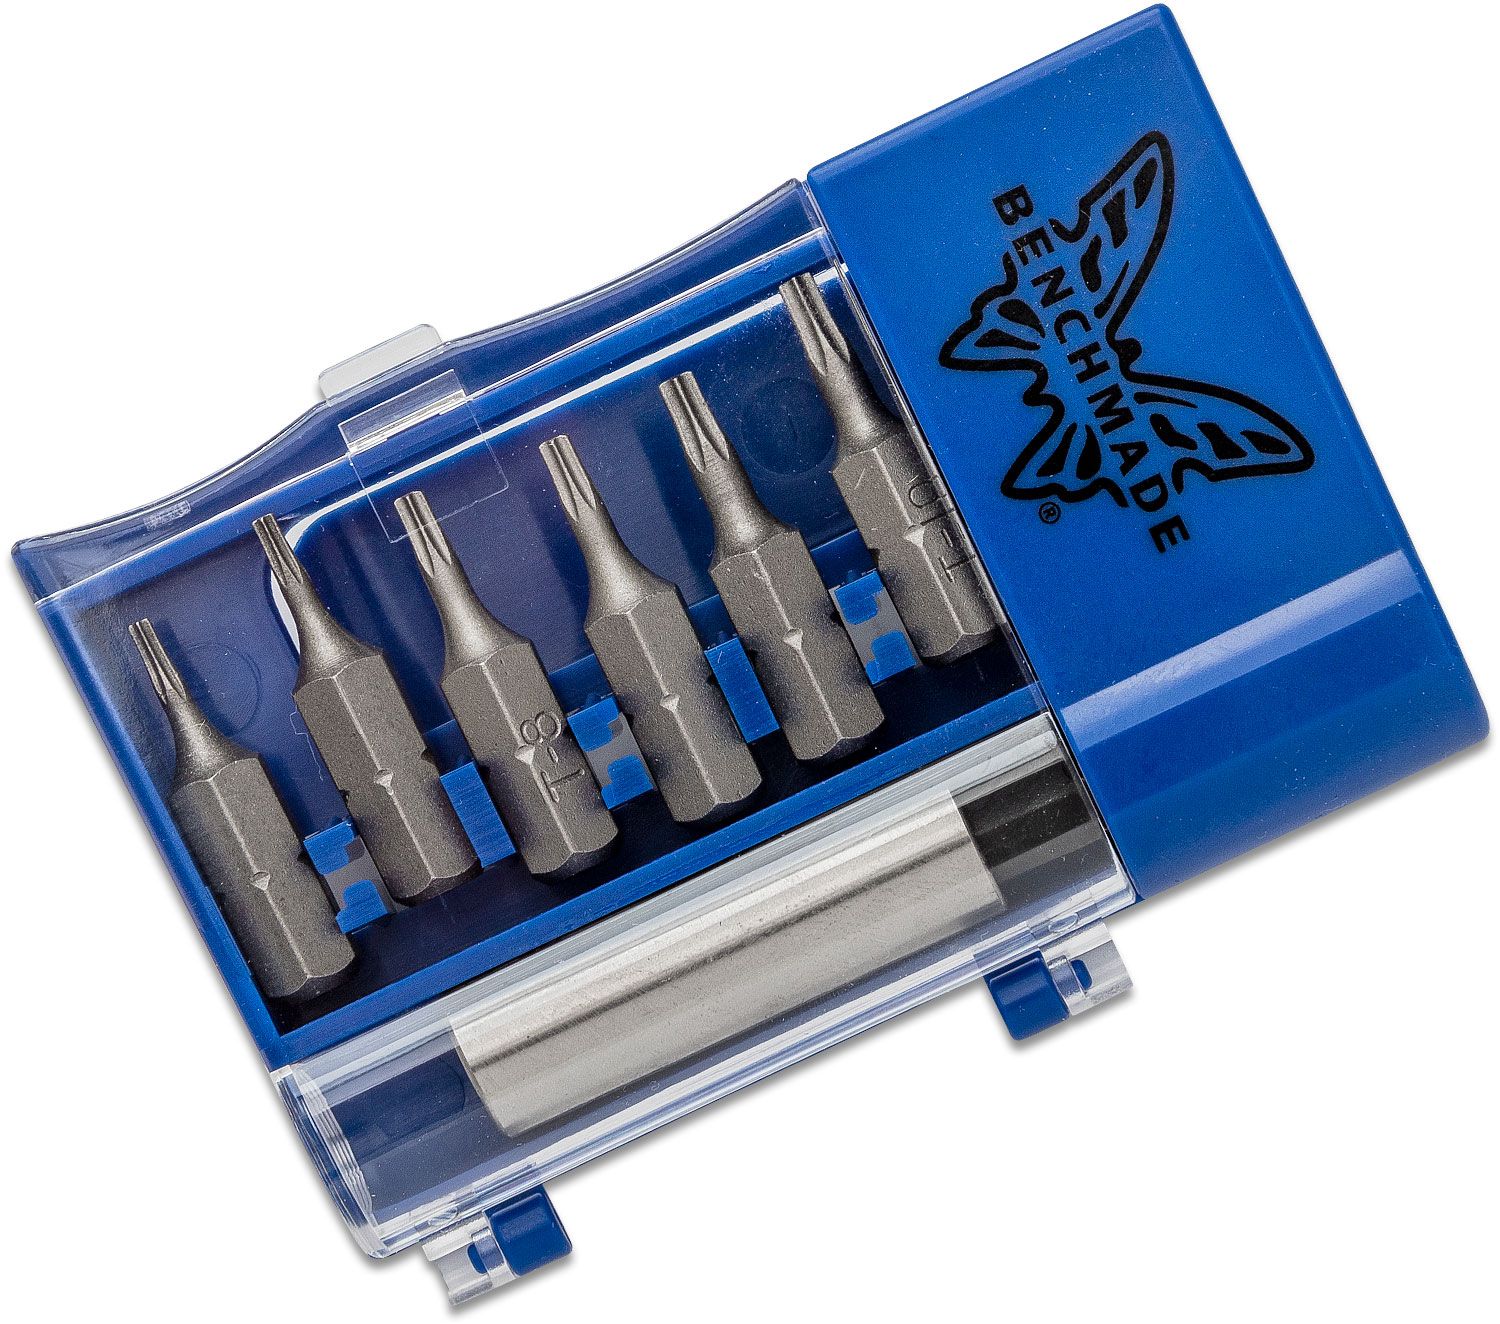 Benchmade BlueBox Service Kit Pocket Torx Tool Set - KnifeCenter